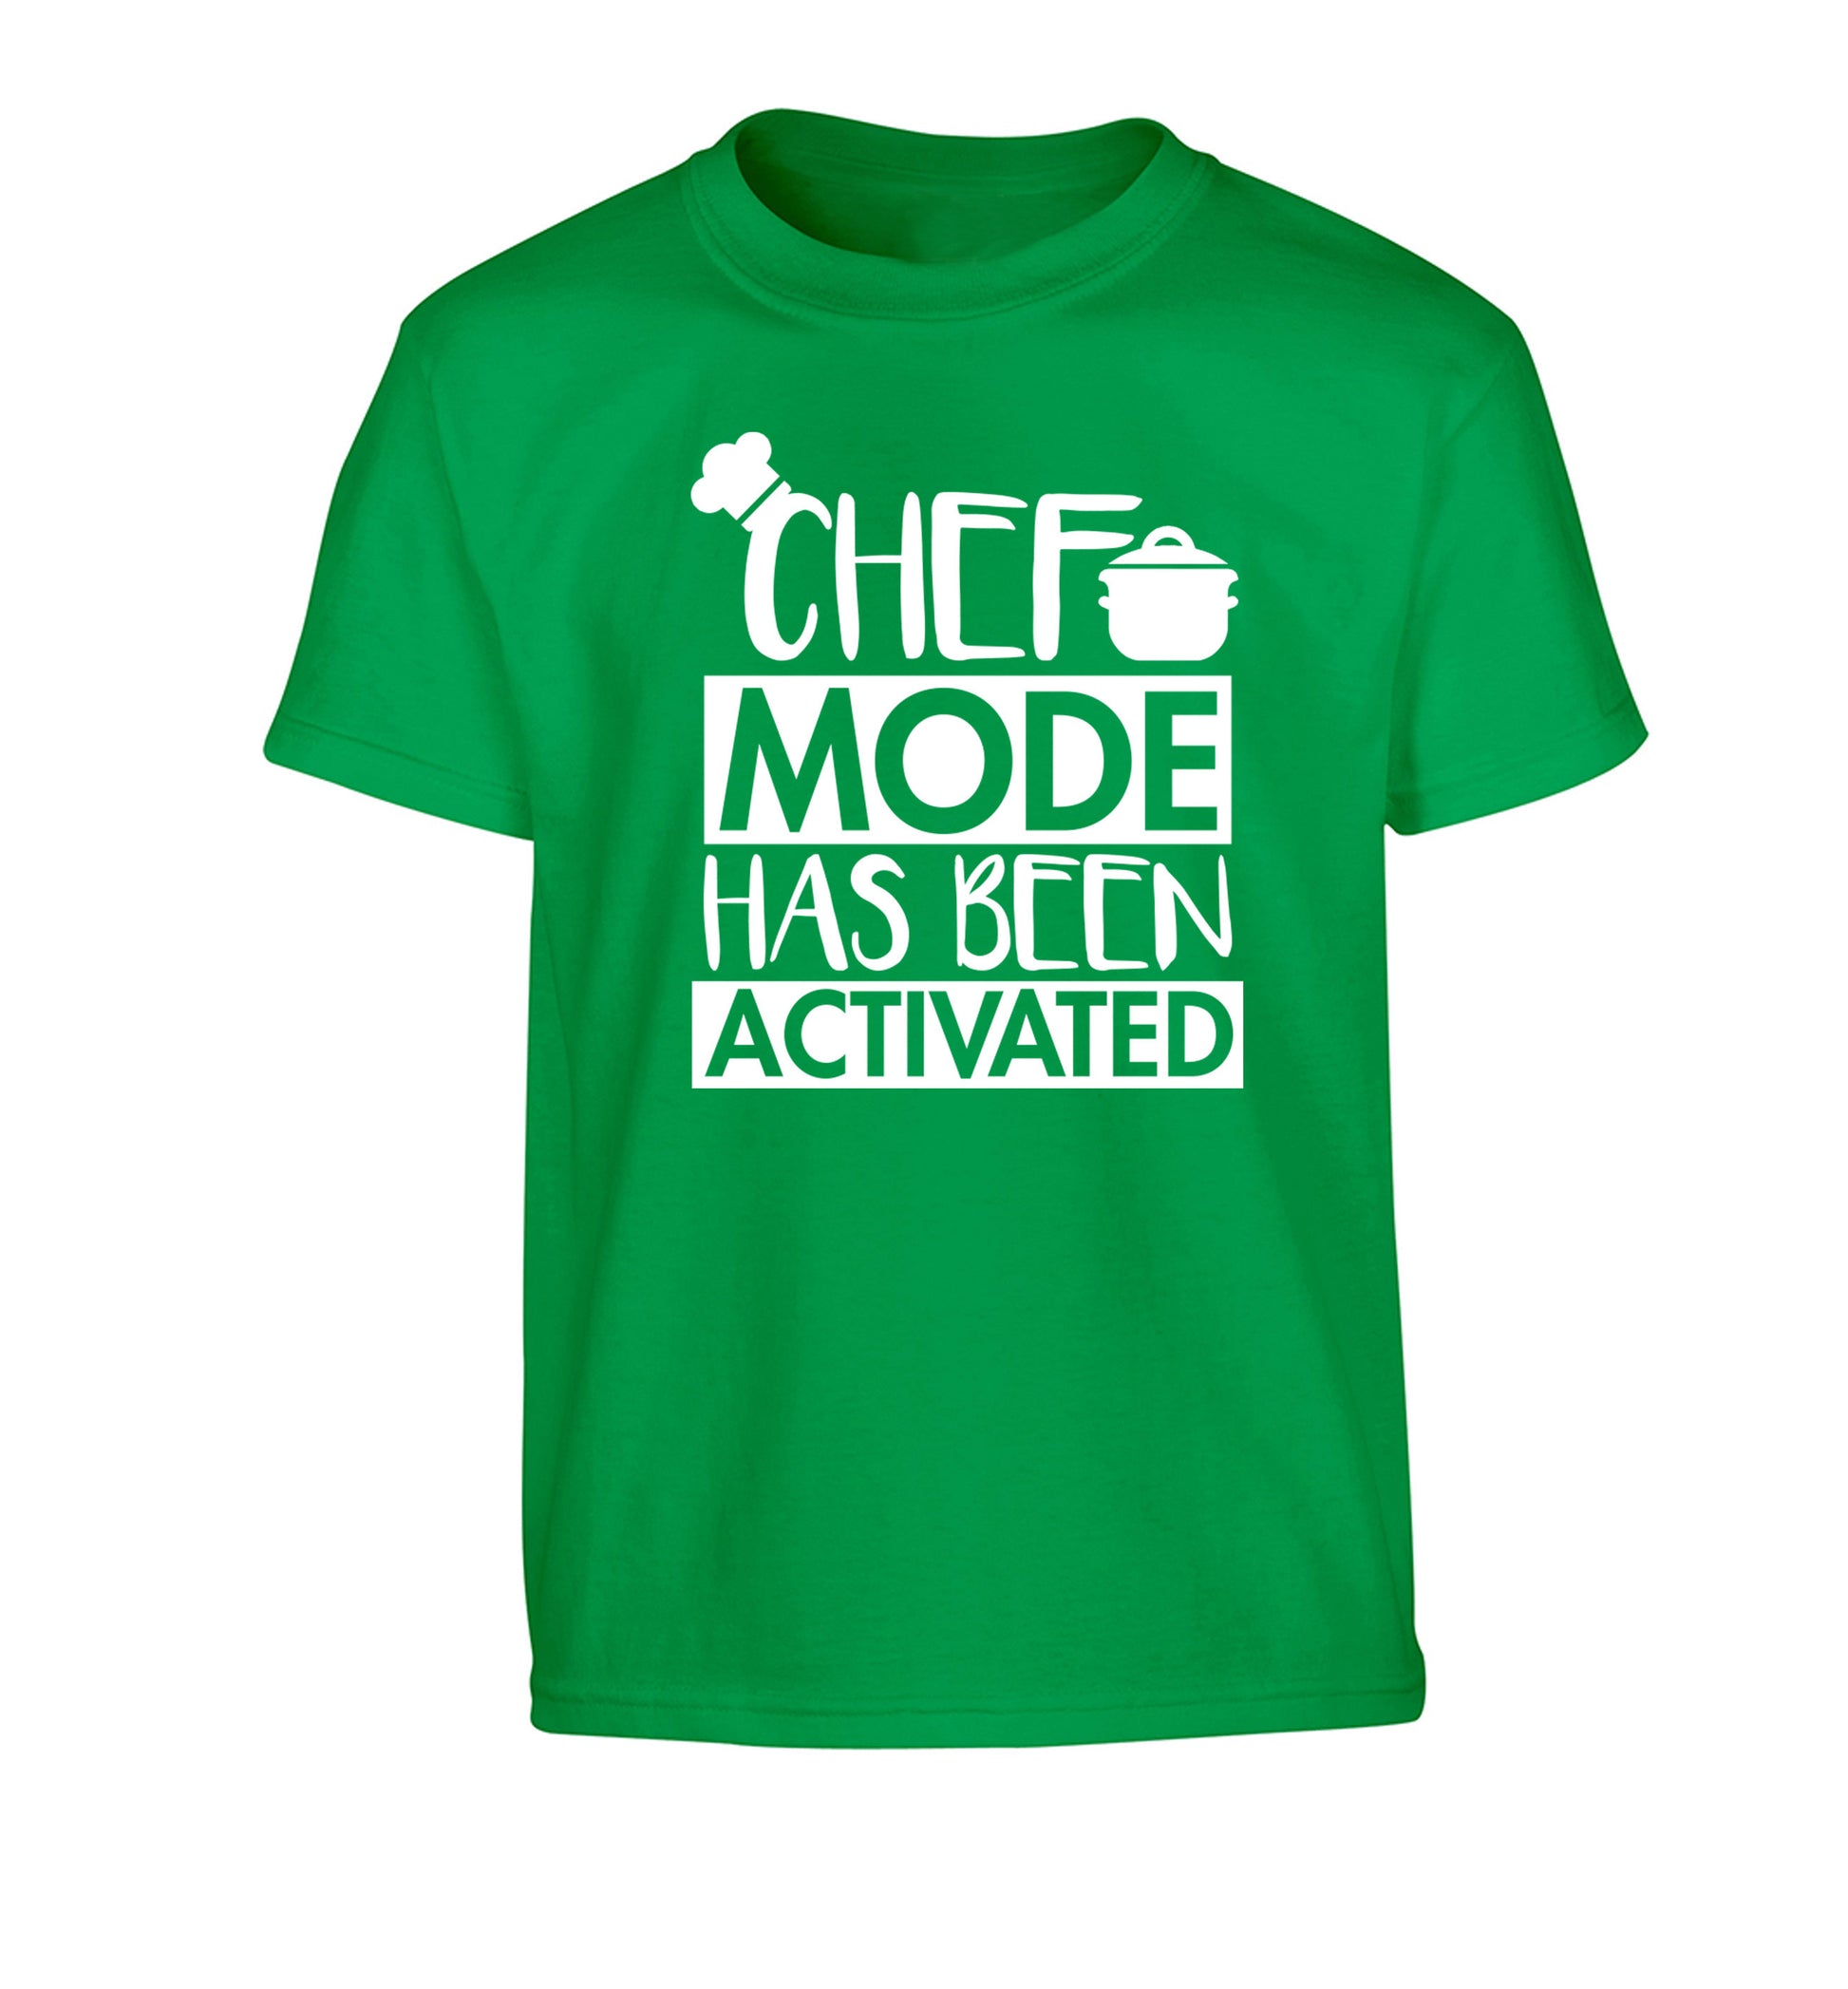 Chef mode has been activated Children's green Tshirt 12-14 Years